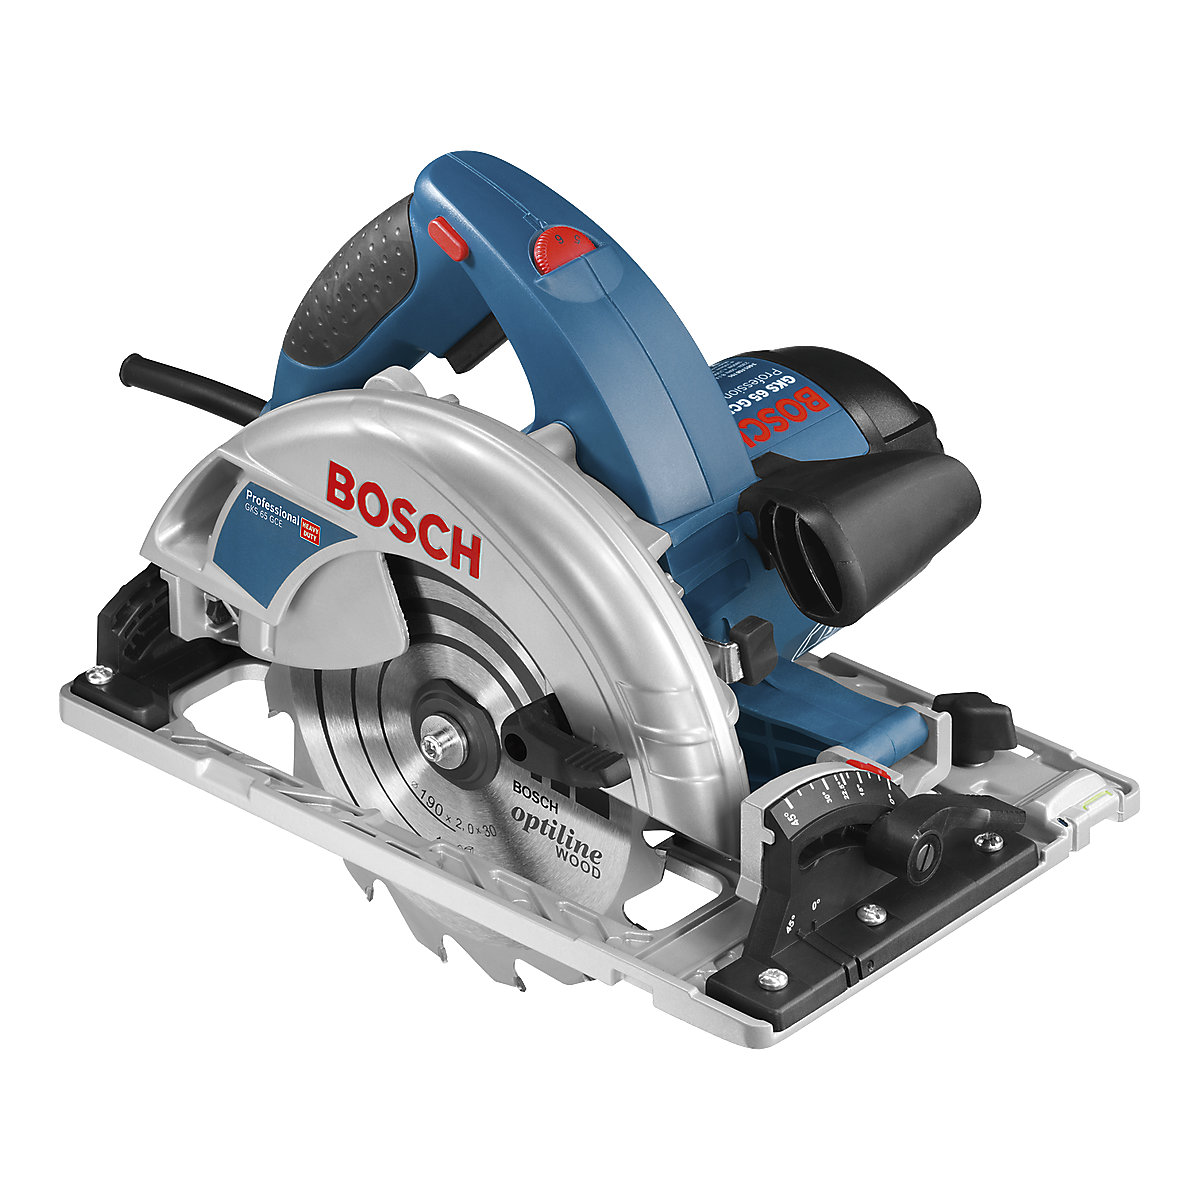 GKS 65 GCE Professional hand-held circular saw – Bosch